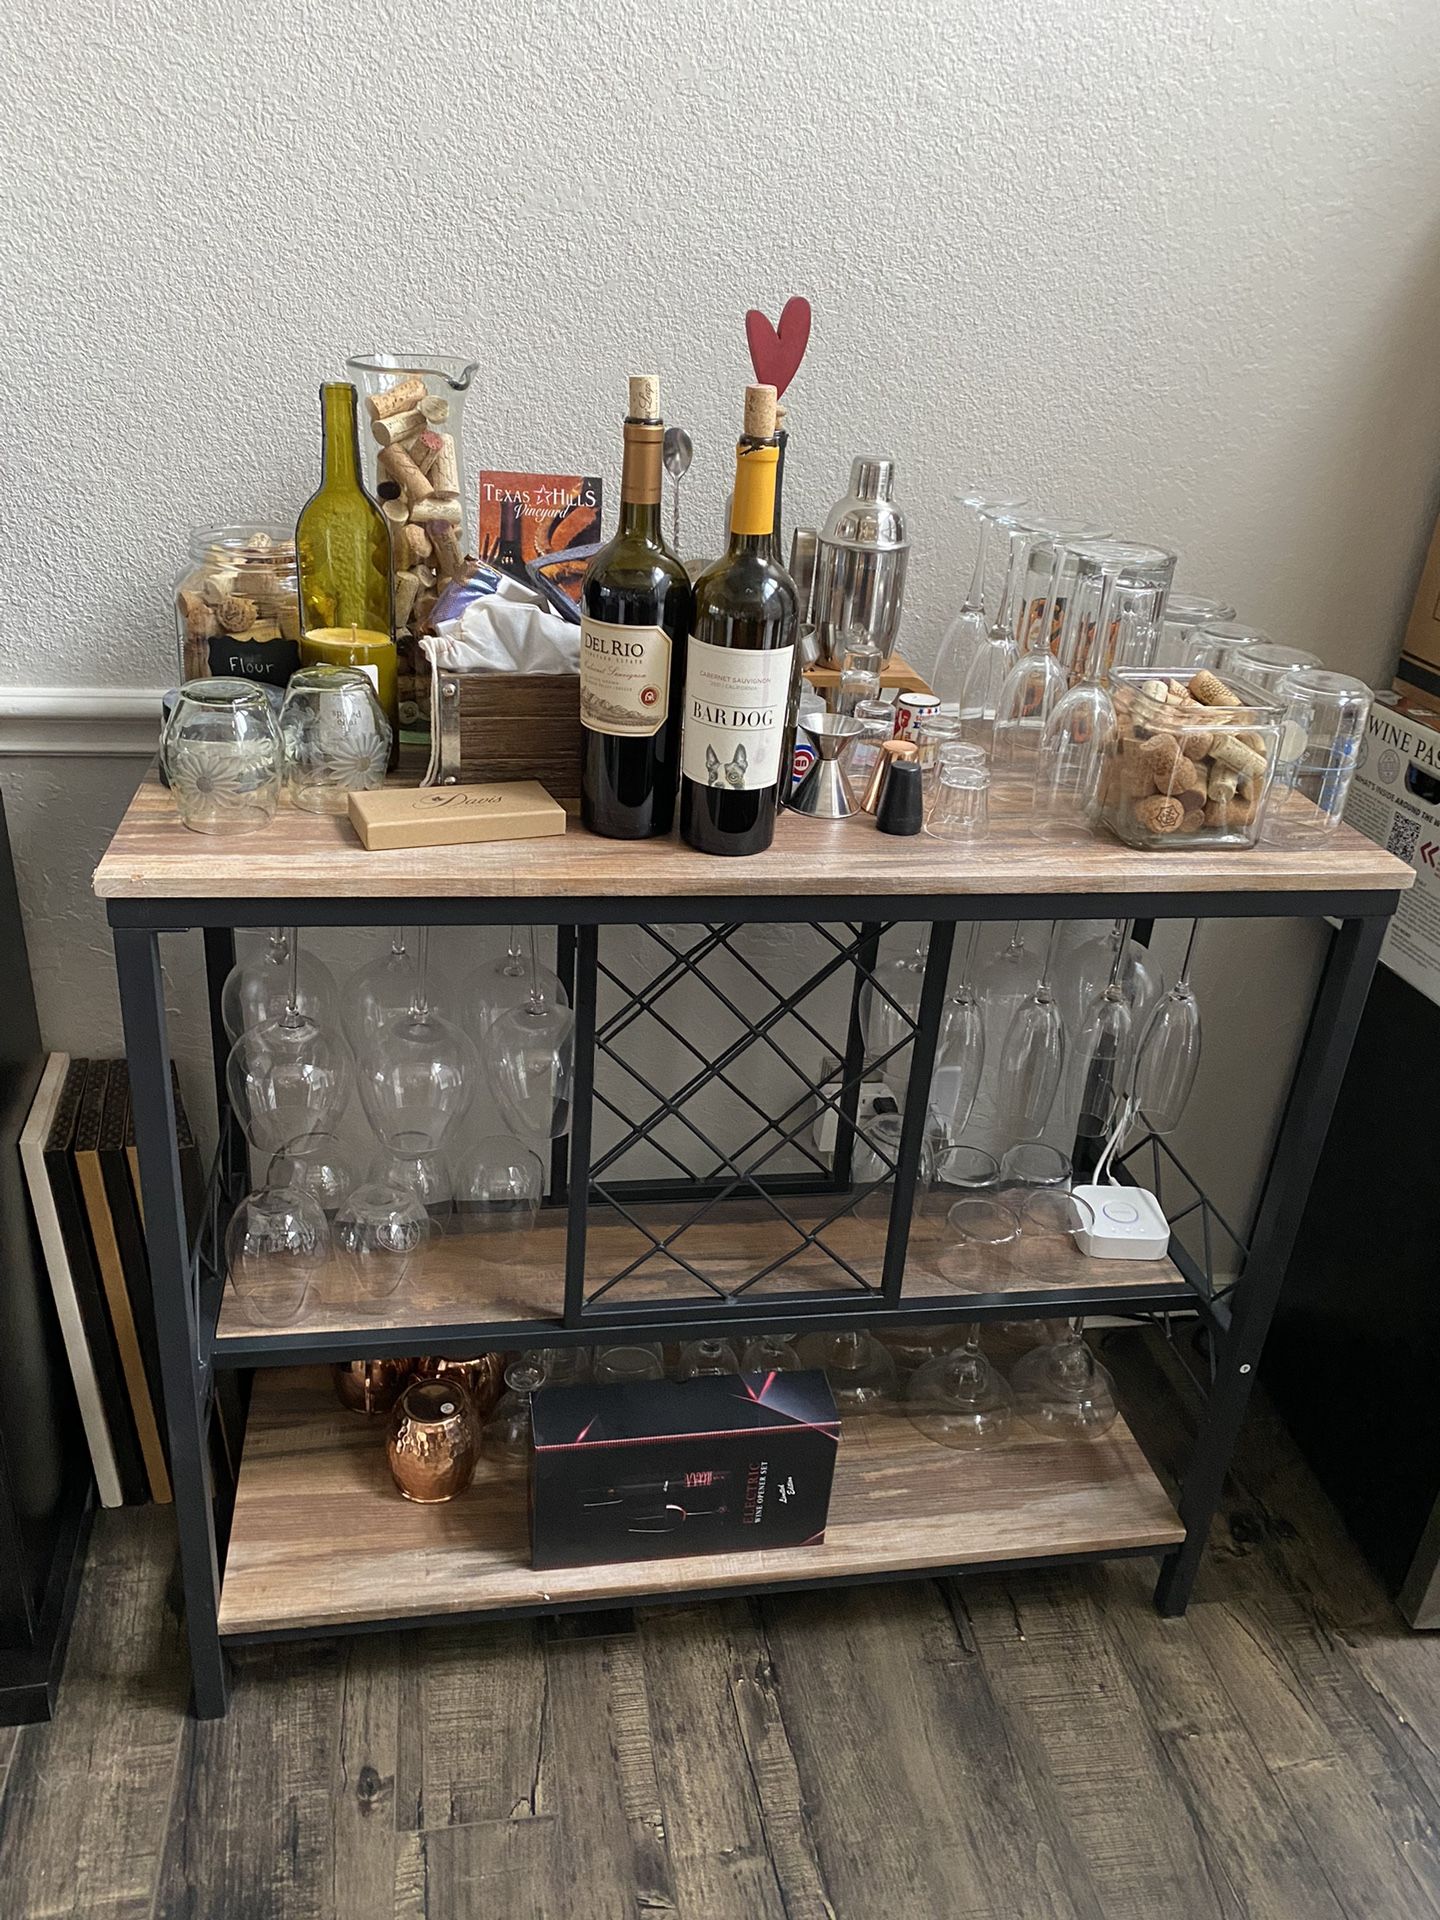 Bar Wine Liquor Shelf Cabinet